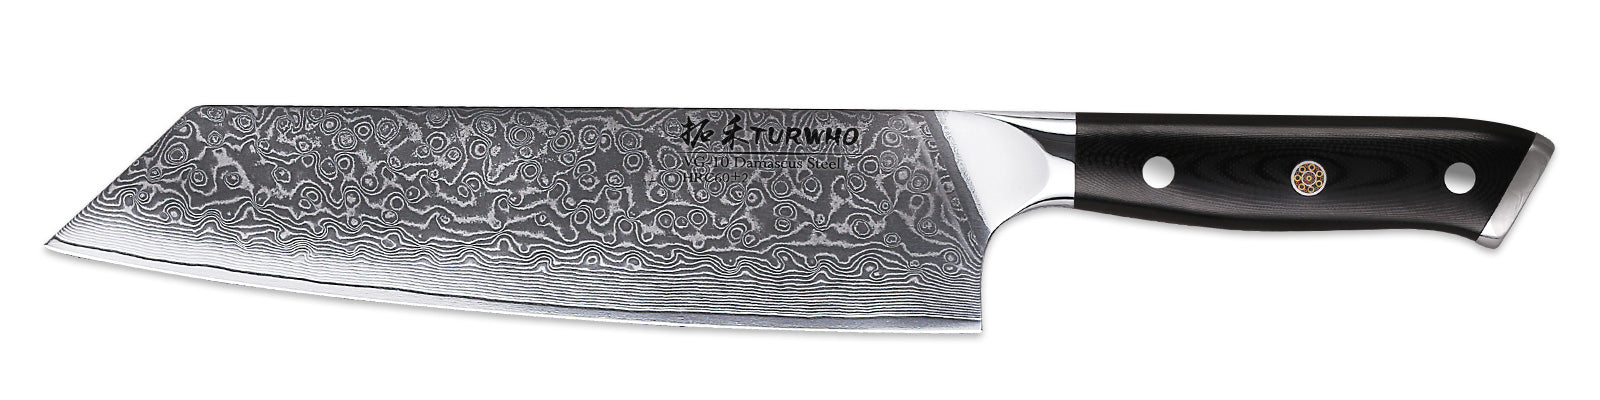 Japanese Chef Knives VG10 Damascus Steel